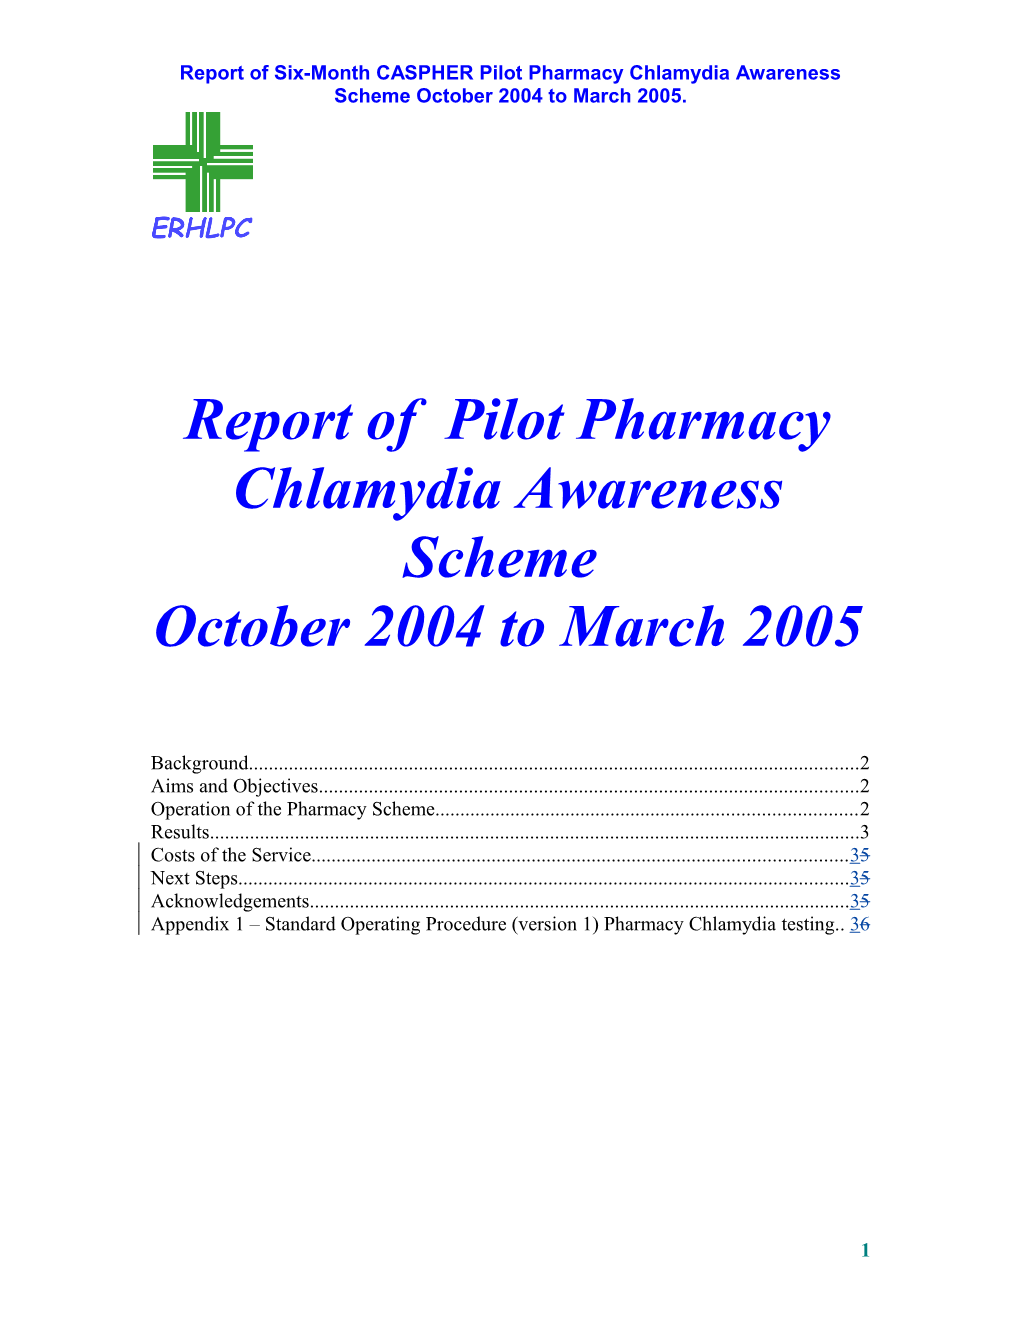 Report of Six Month Pilot Pharmacy Chlamydia Awareness Scheme